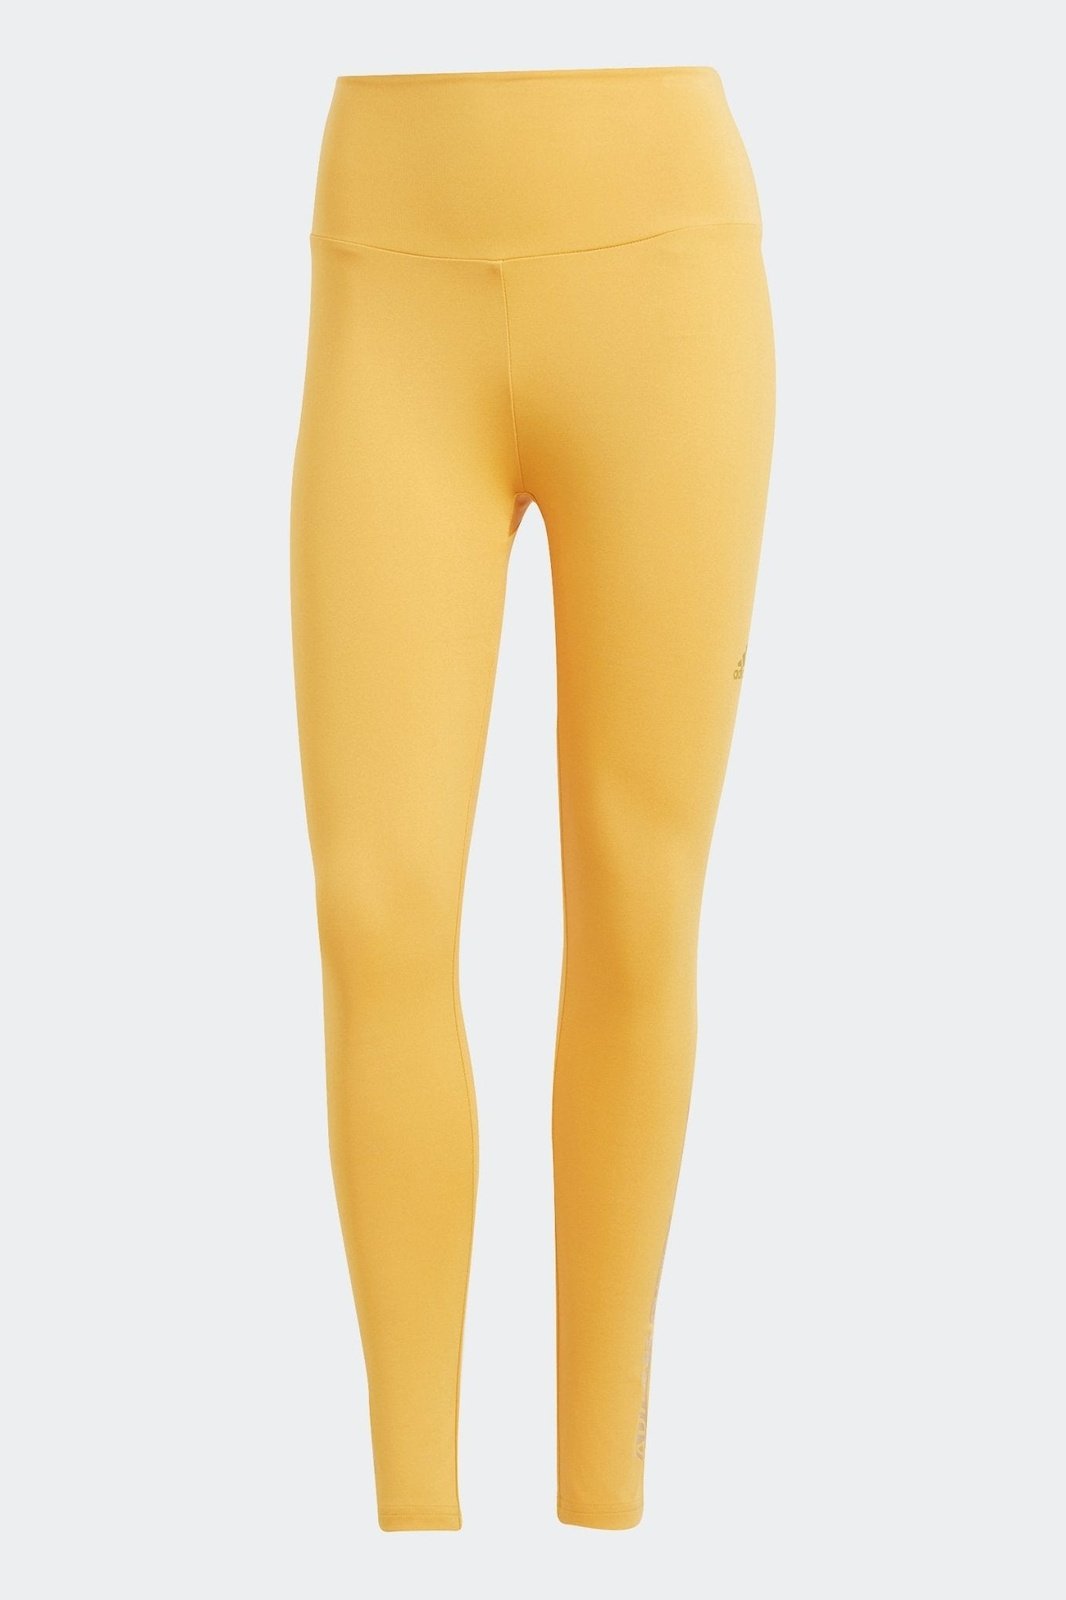 ADIDAS - טייץ לנשים PREYEL GOLDM בצבע צהוב - MASHBIR//365